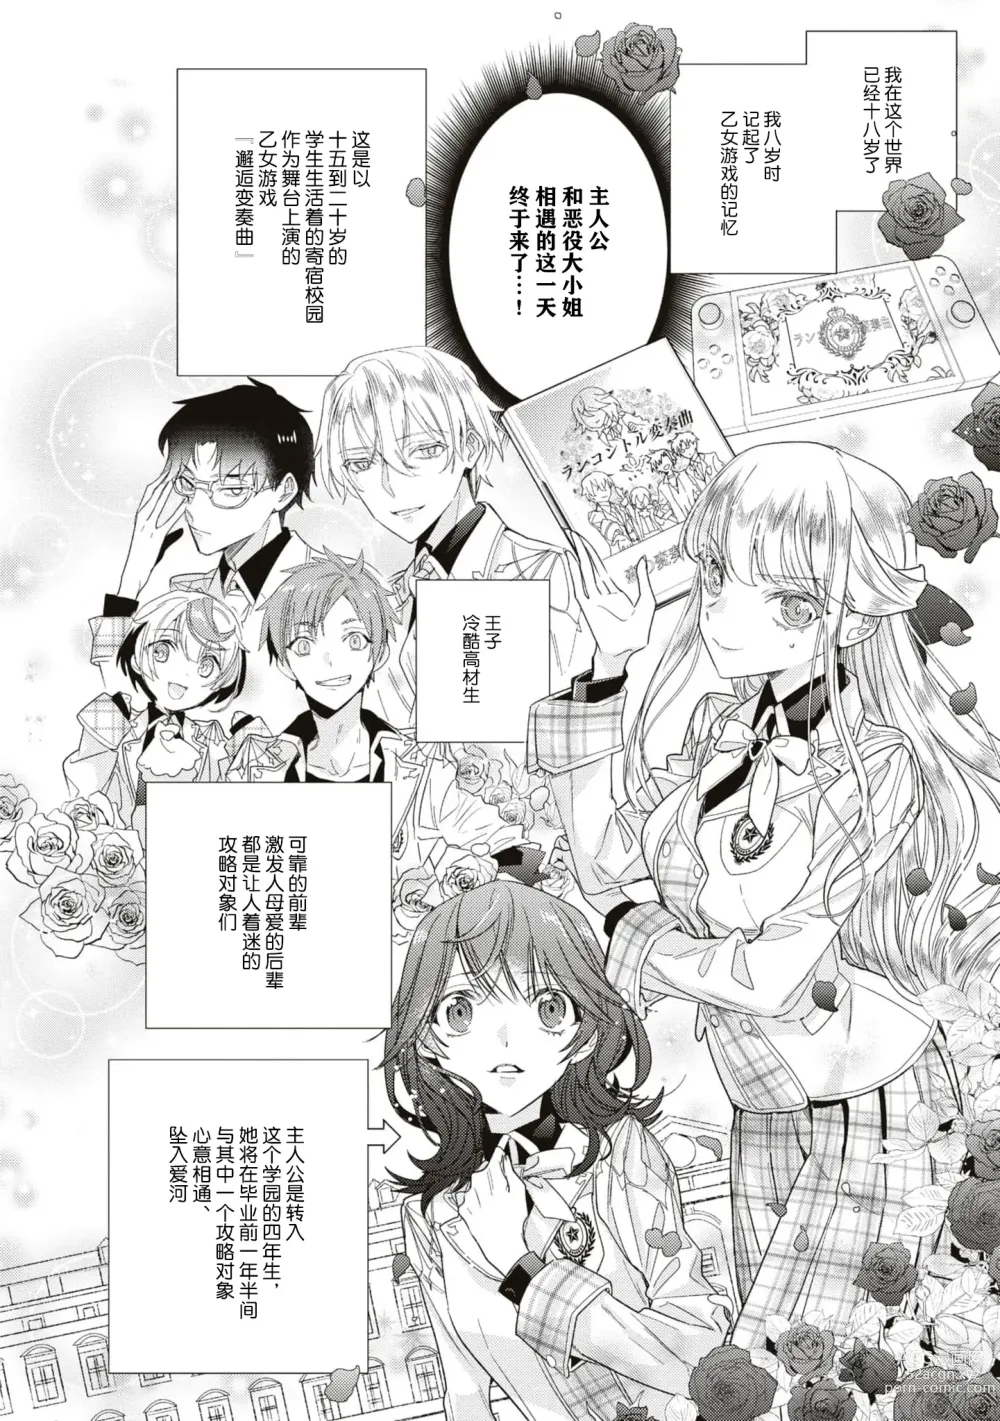 Page 6 of manga 全力扮演恶役大小姐的我，却遇上变成邻国王子的性转主人公